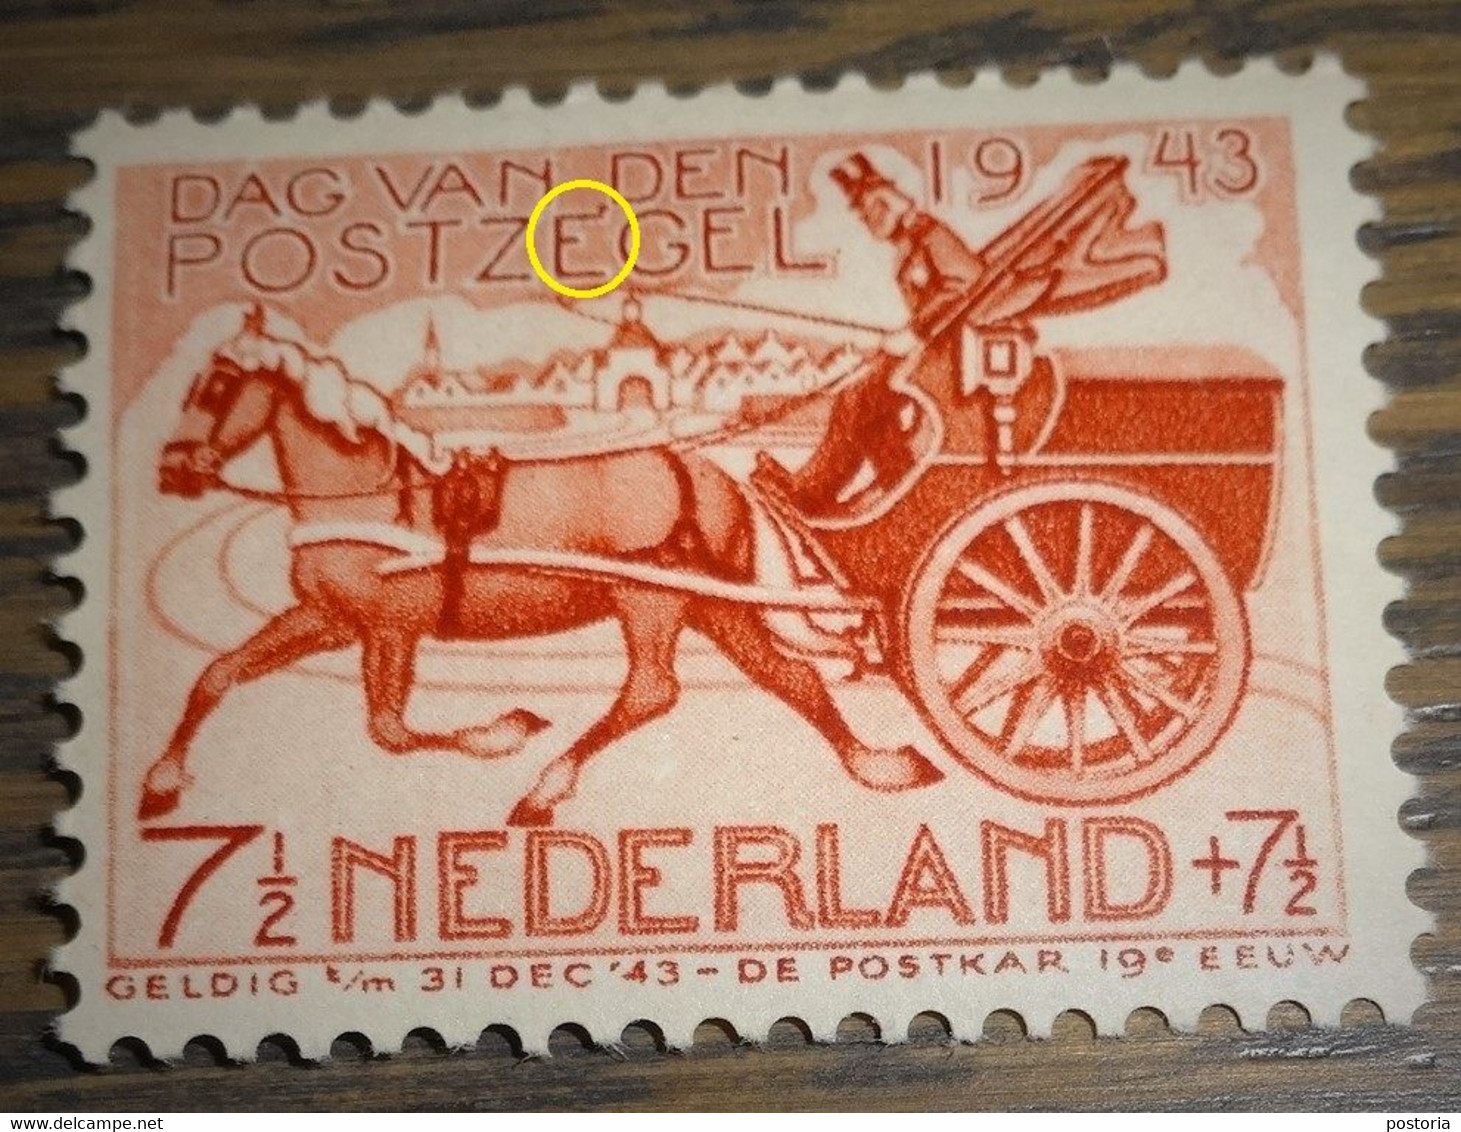 Nederland - MAST - 422 P - 1943 - Plaatfout - Postfris - Puntje Boven 1e E Van POSTZEGEL - Errors & Oddities